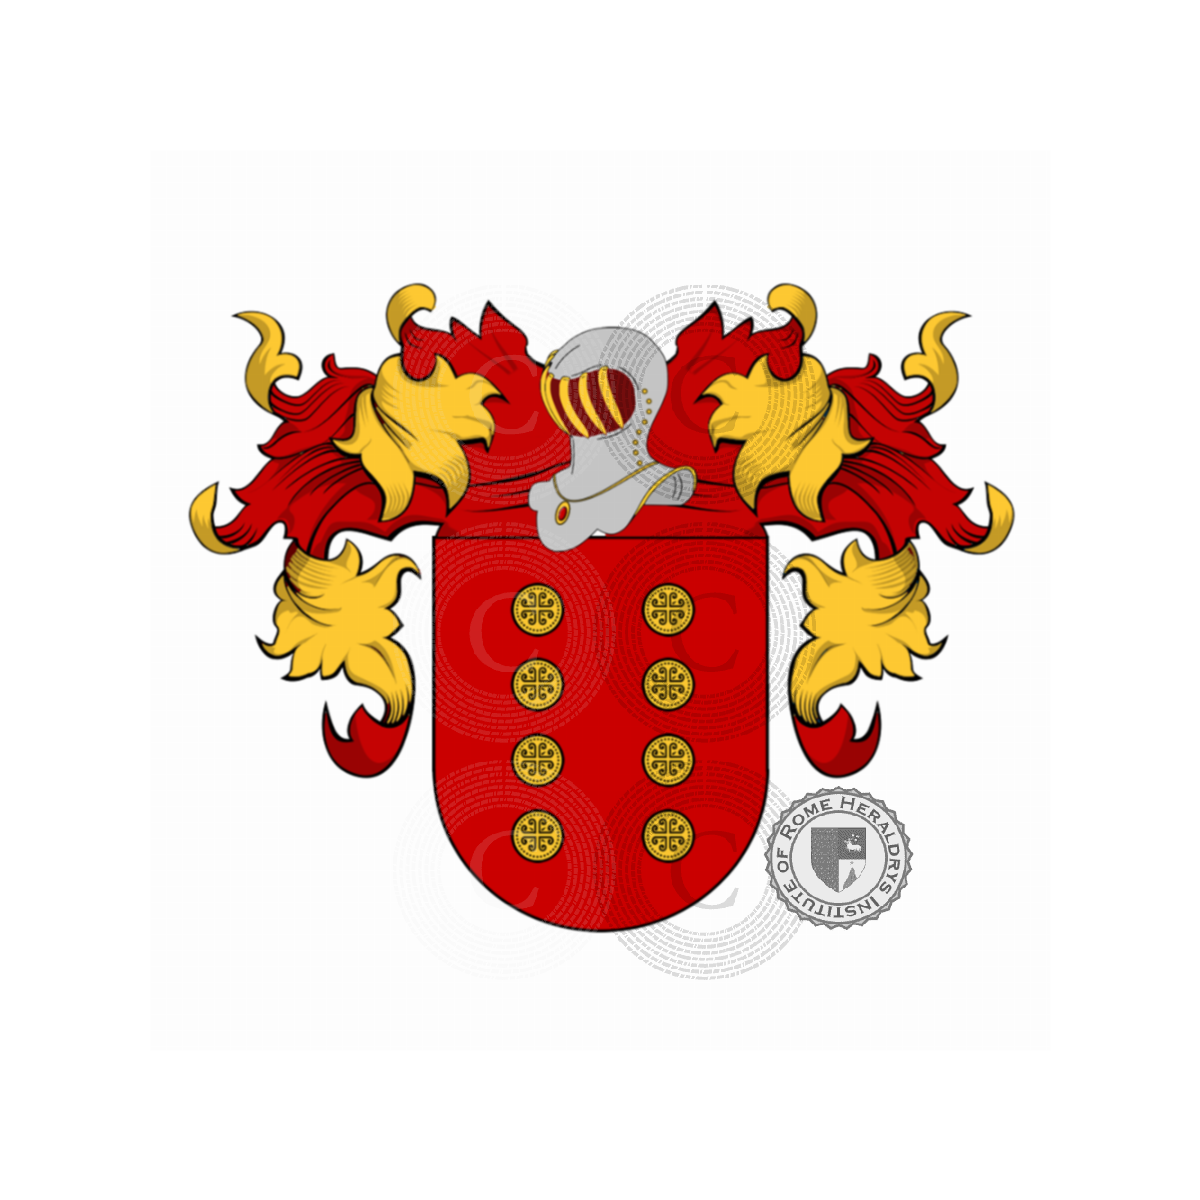 Wappen der FamilieMarch